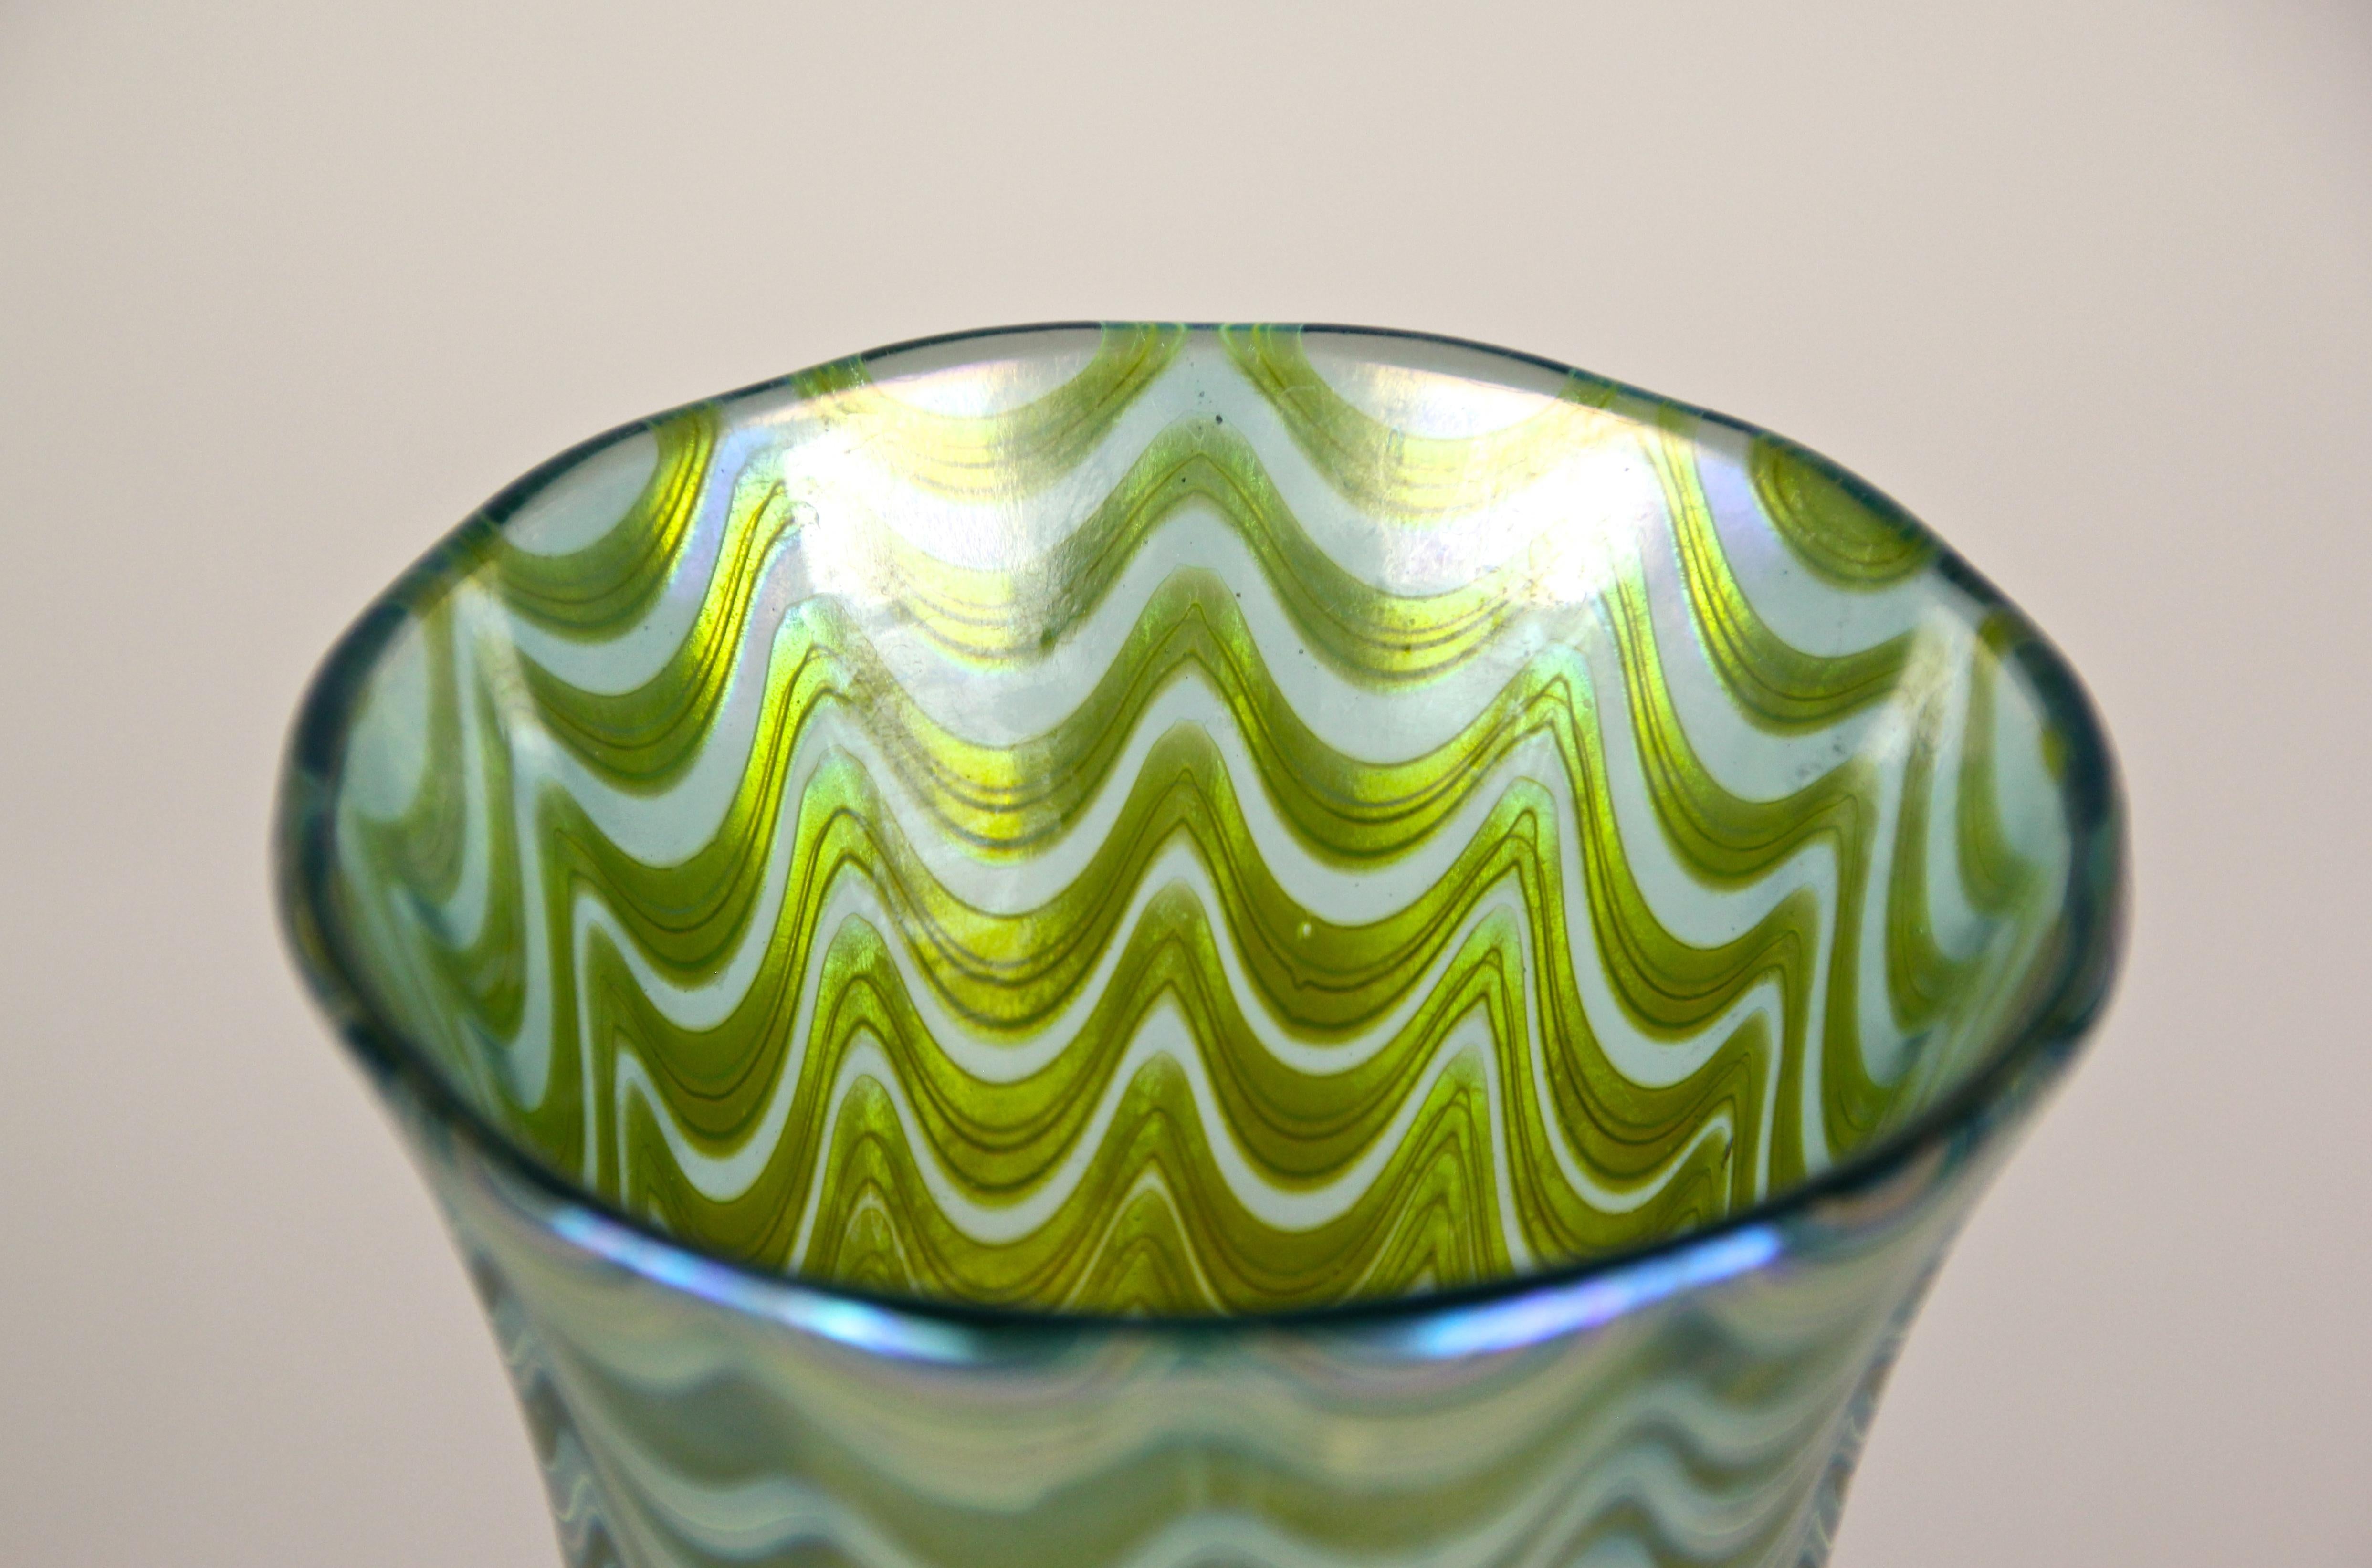 Czech Loetz Witwe Glass Vase Phaenomen Genre 6893 Green, Bohemia, circa 1899 For Sale